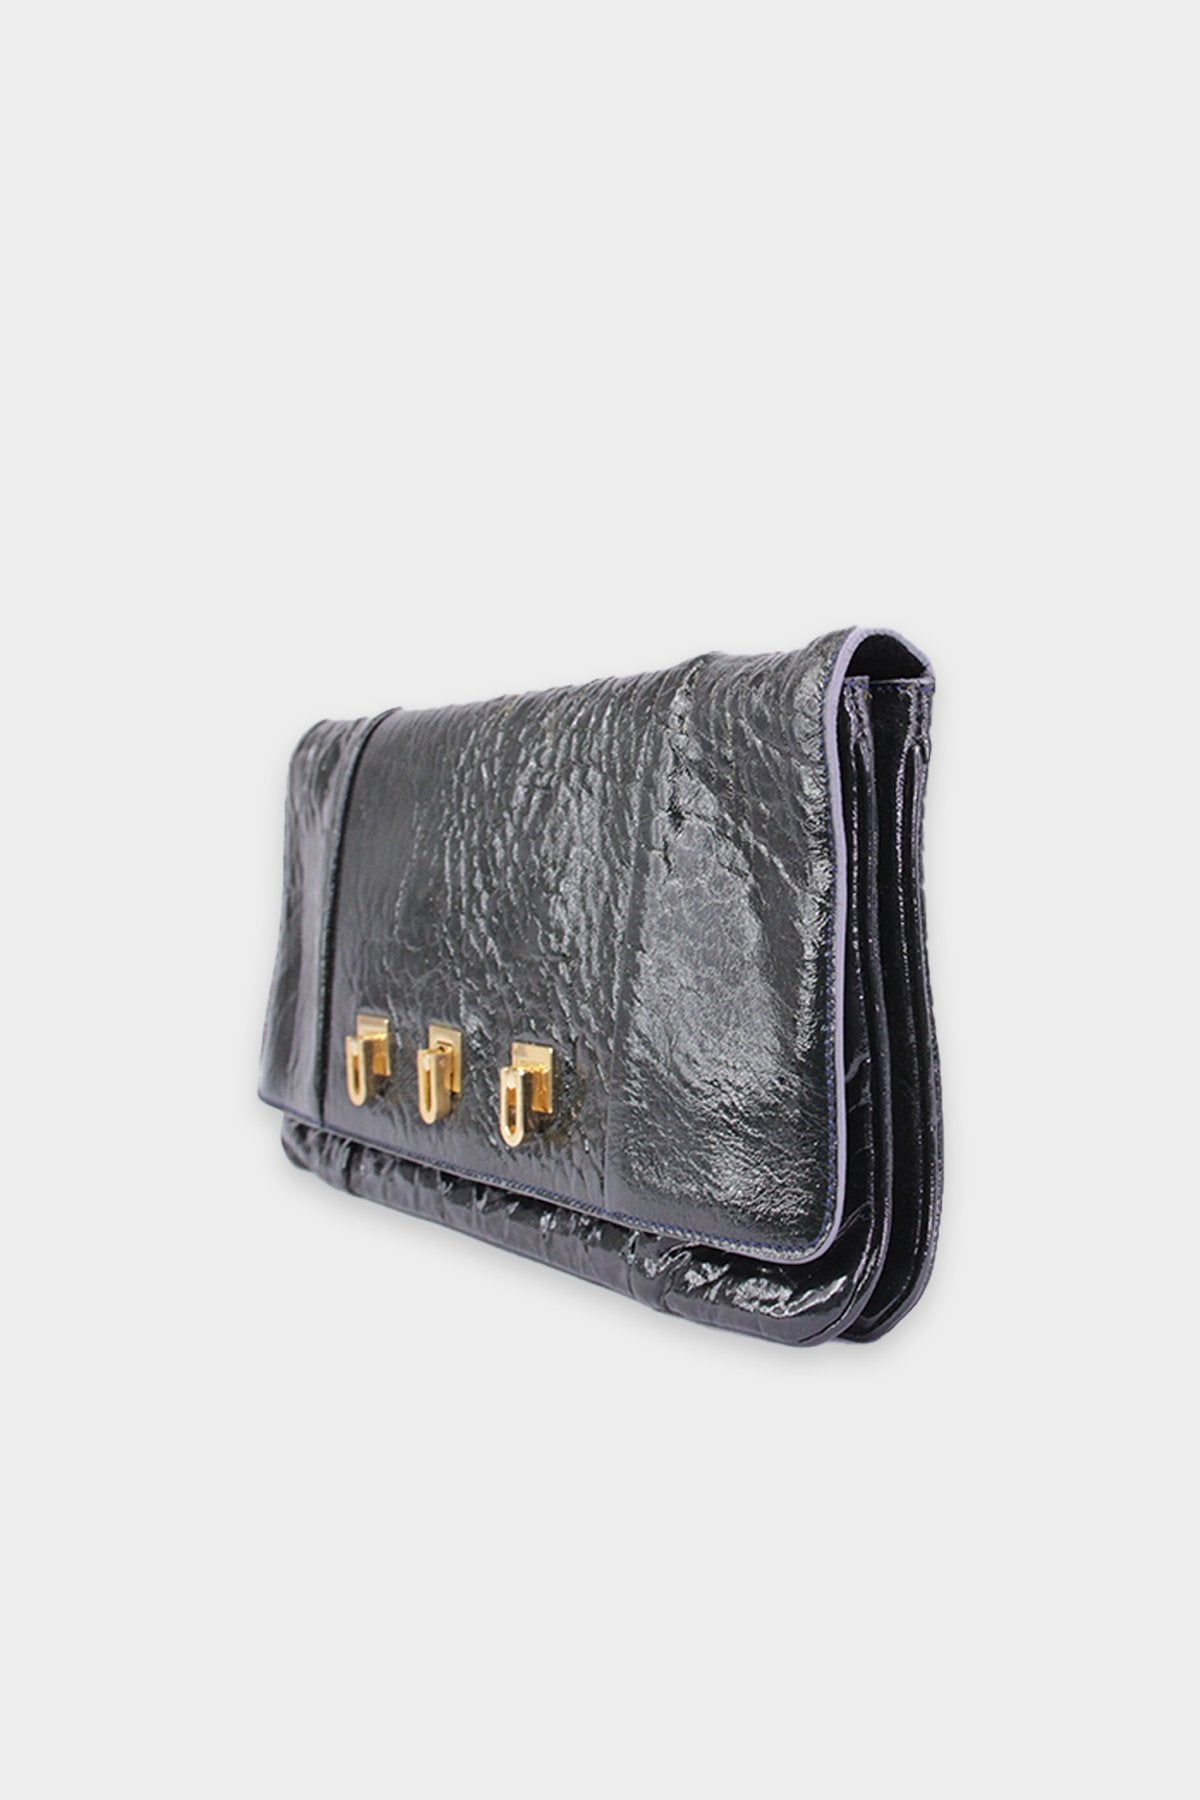 Green Dooney & Burke purse. Patent leather. Crossbody. | Leather, Purses  crossbody, Dooney